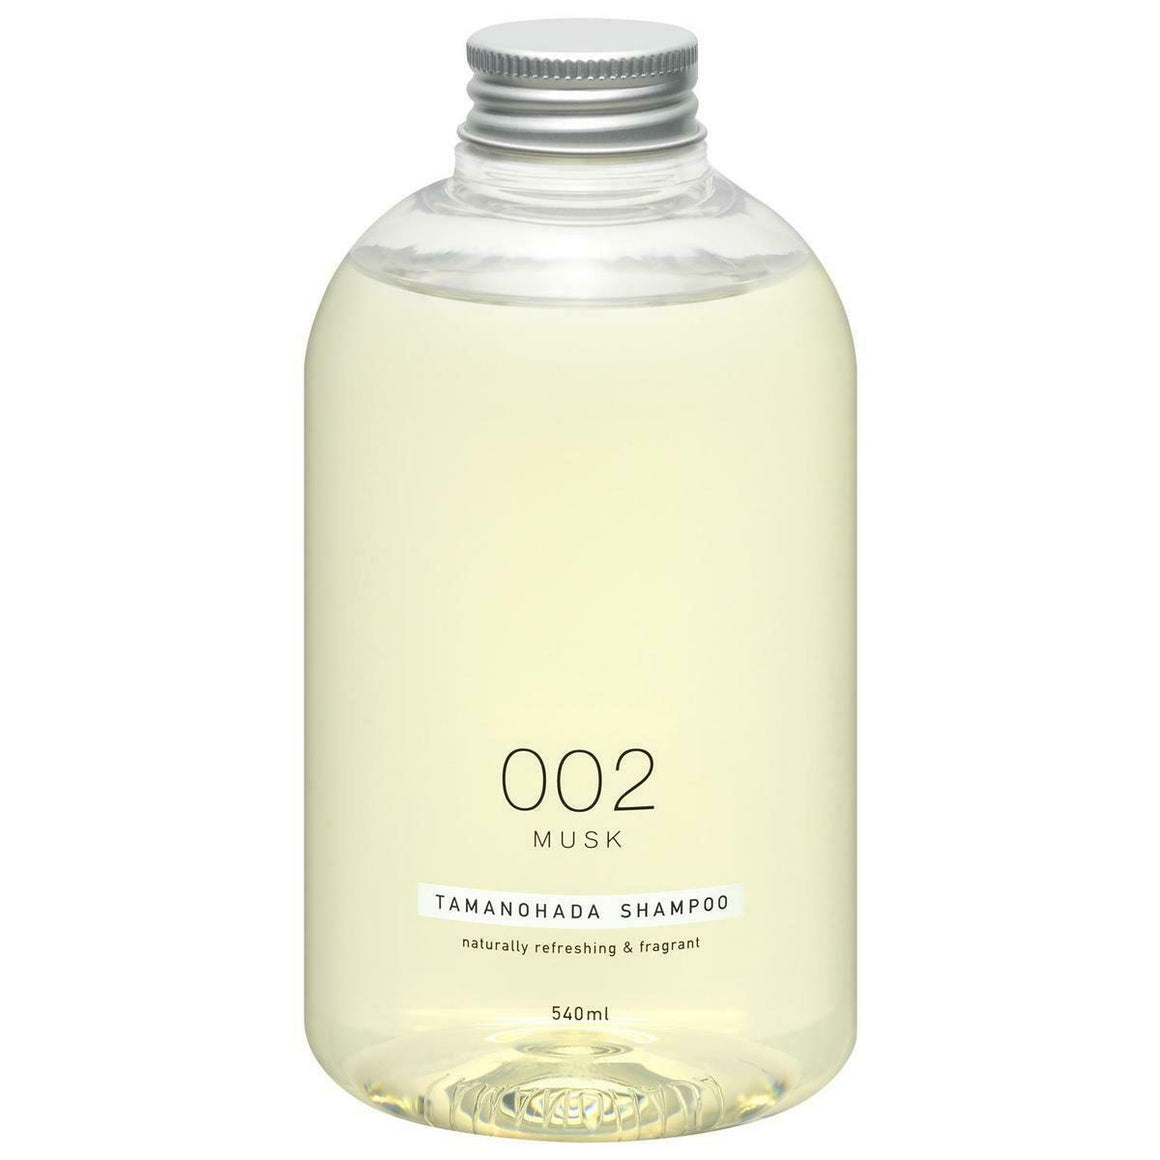 TAMANOHADA Shampoo (540ml) - 002 Musk / 003 Rose 玉の肌 無矽靈 精油香氛洗髮精